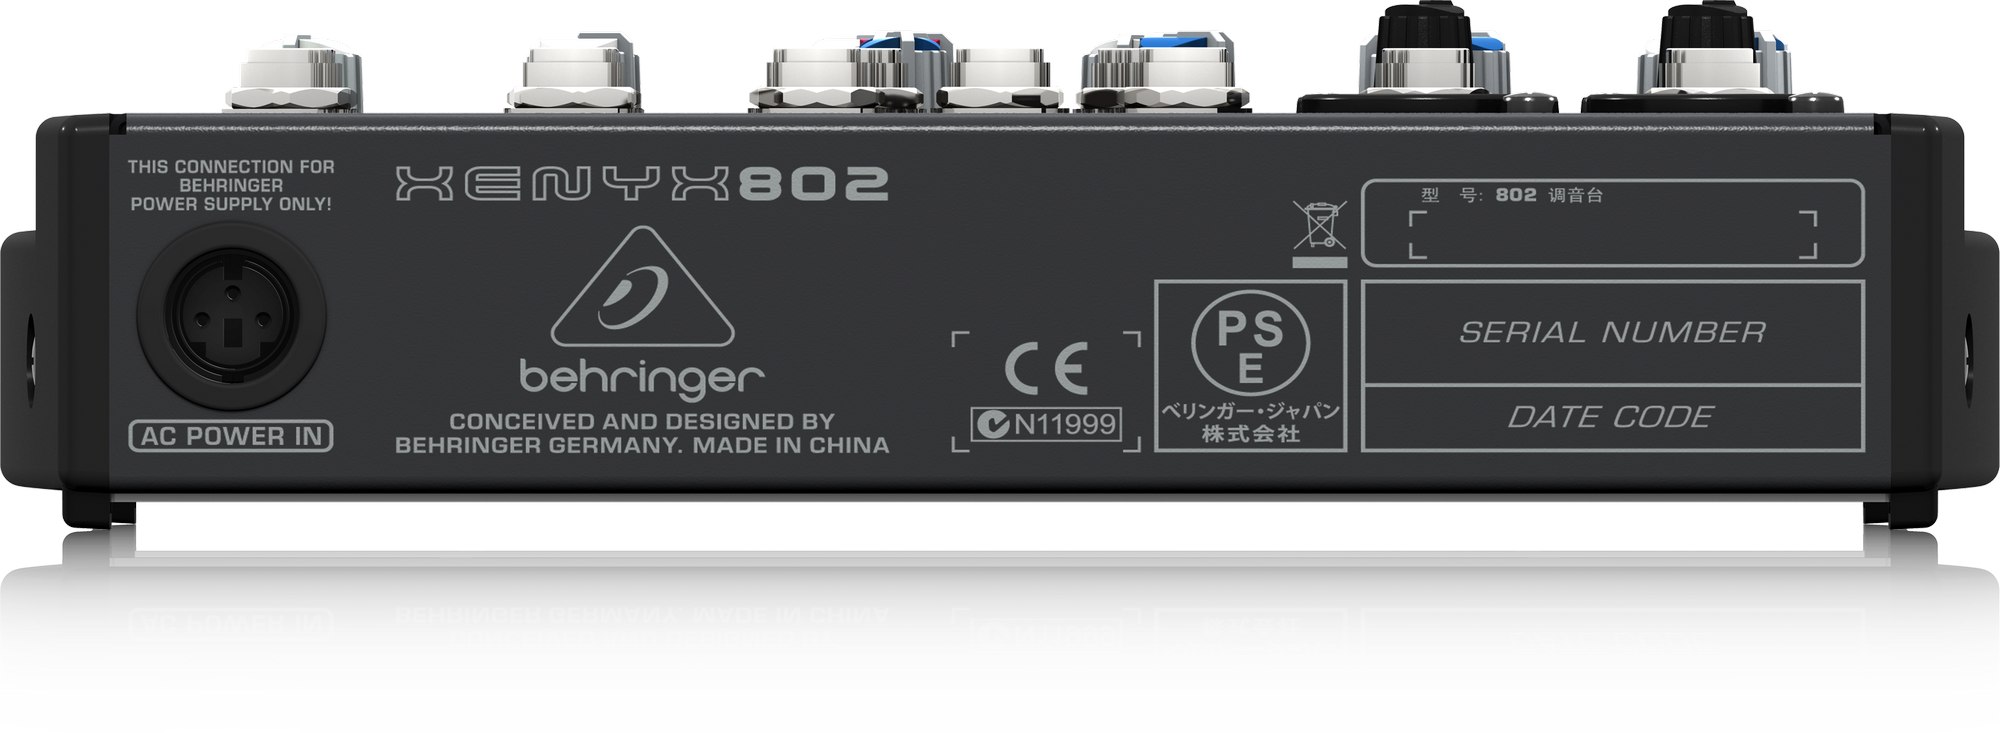 Behringer 802 Analog - Audio Shop Nepal